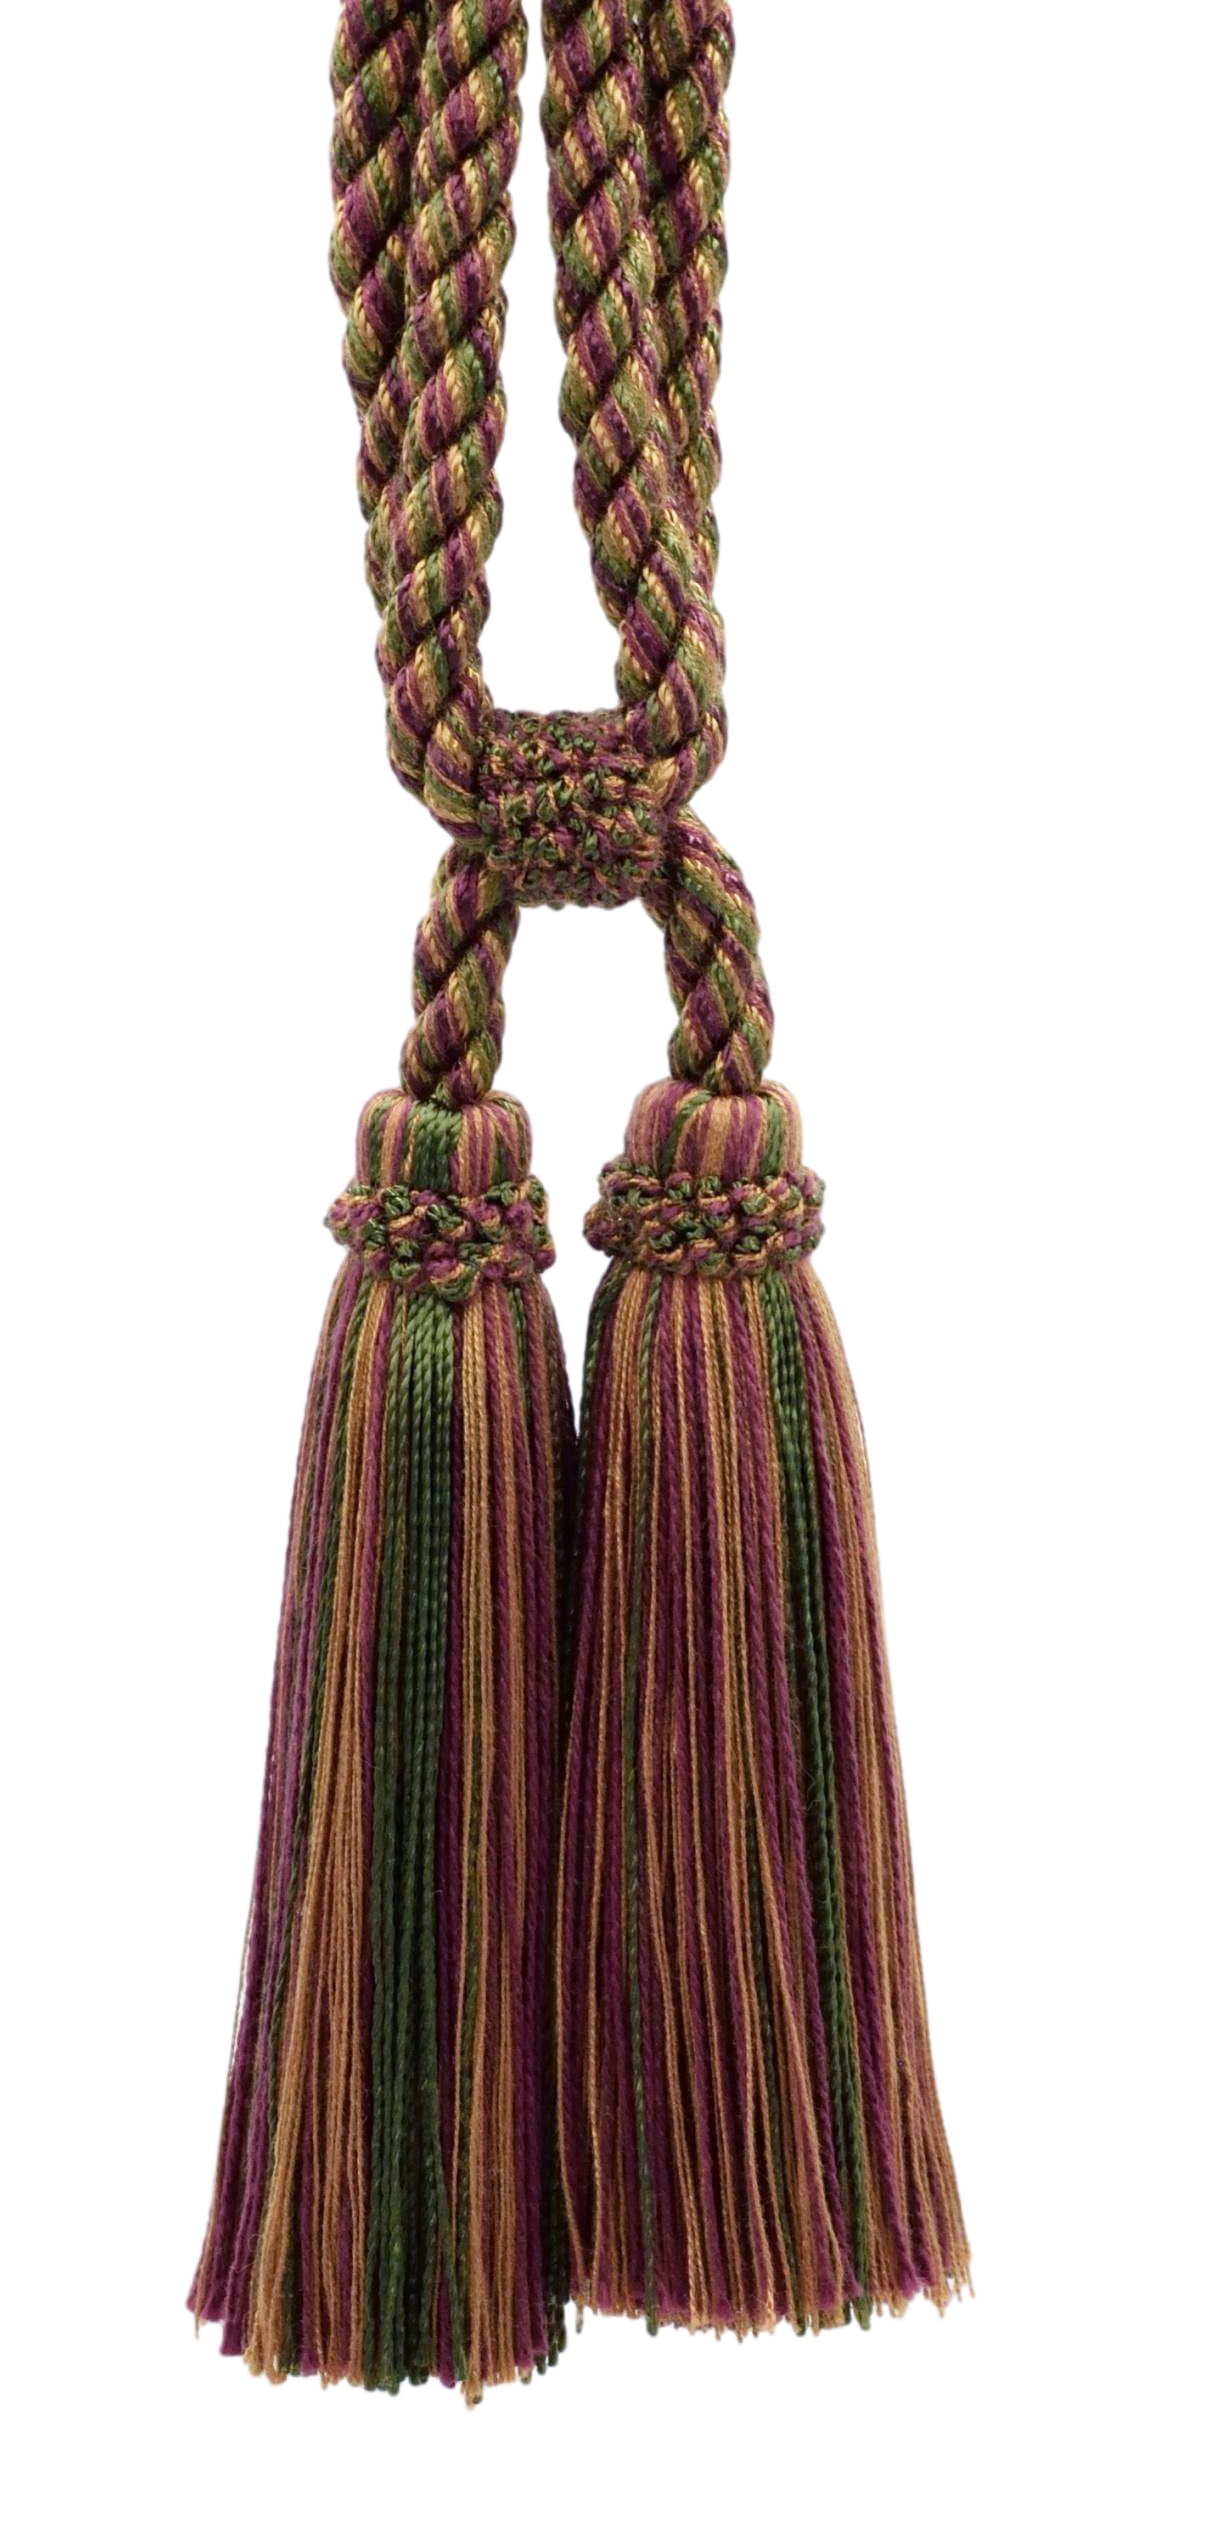 Drapery Tieback Purple Braided Curtain Tie Back with Green Tassels Beads M423.05 